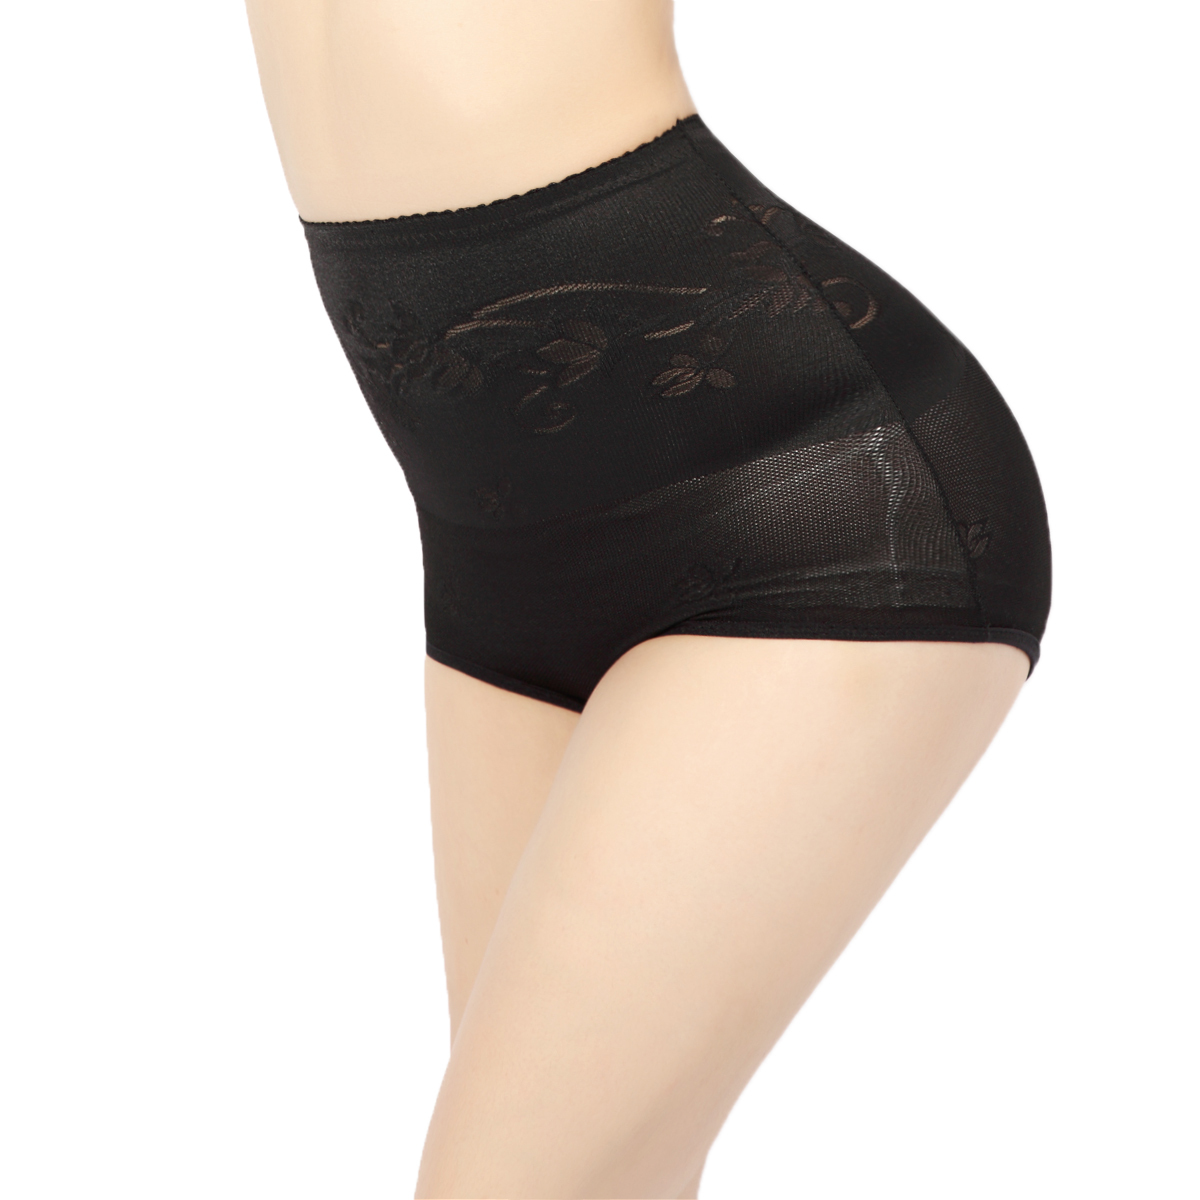 Women's body shaping pants butt-lifting panties thin seamless postpartum weight loss pants corset beauty care panties